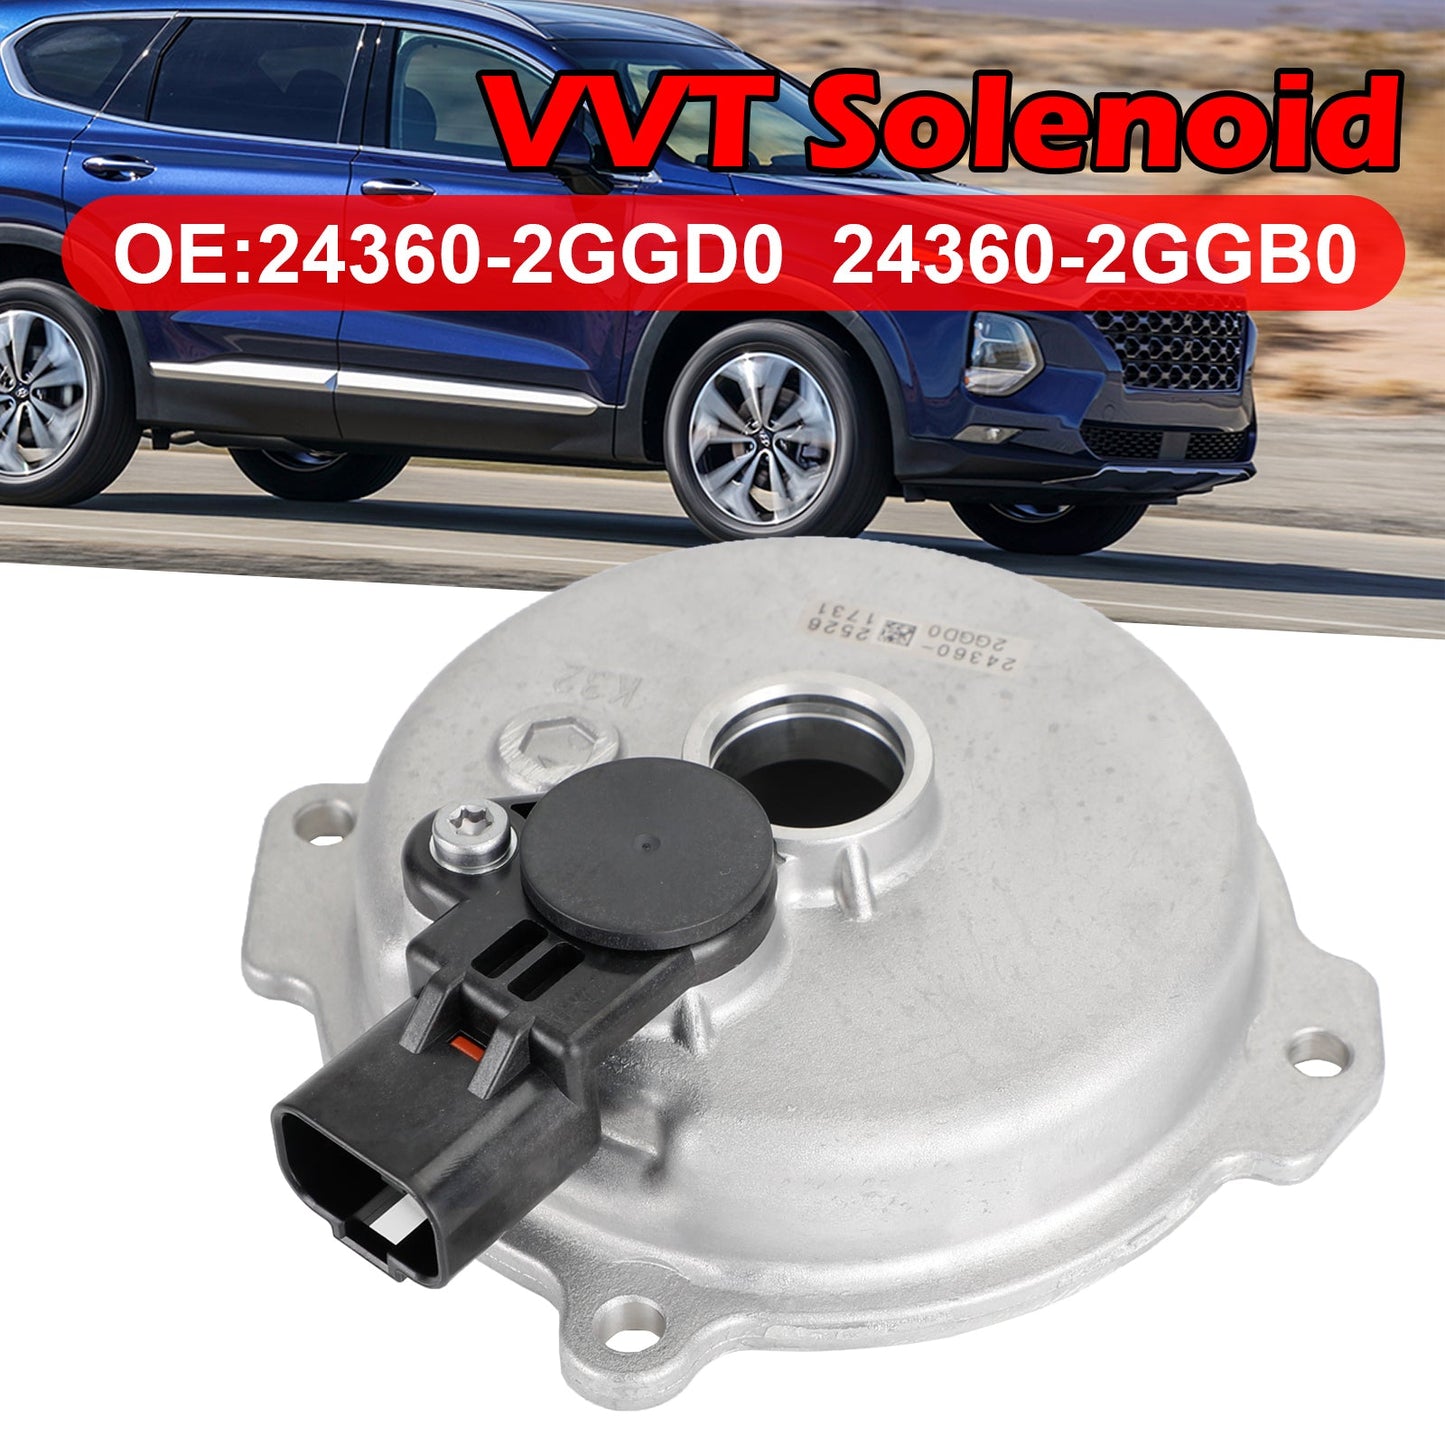 Engine Variable Valve Timing VVT Solenoid for Kia 2.0L 2.4L 15-21 24360-2GGD0